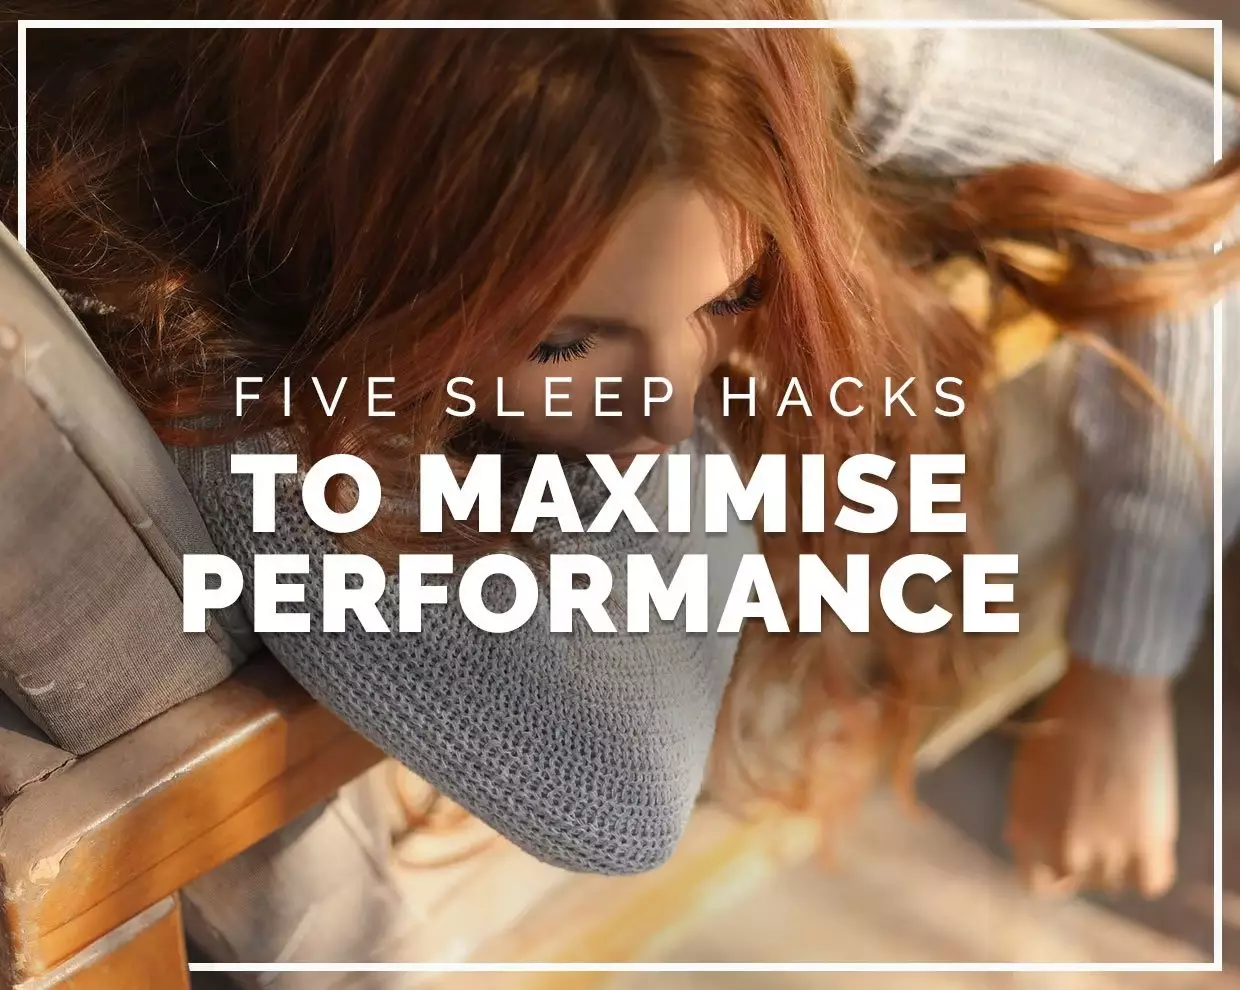 Five sleep hacks to maximise performance